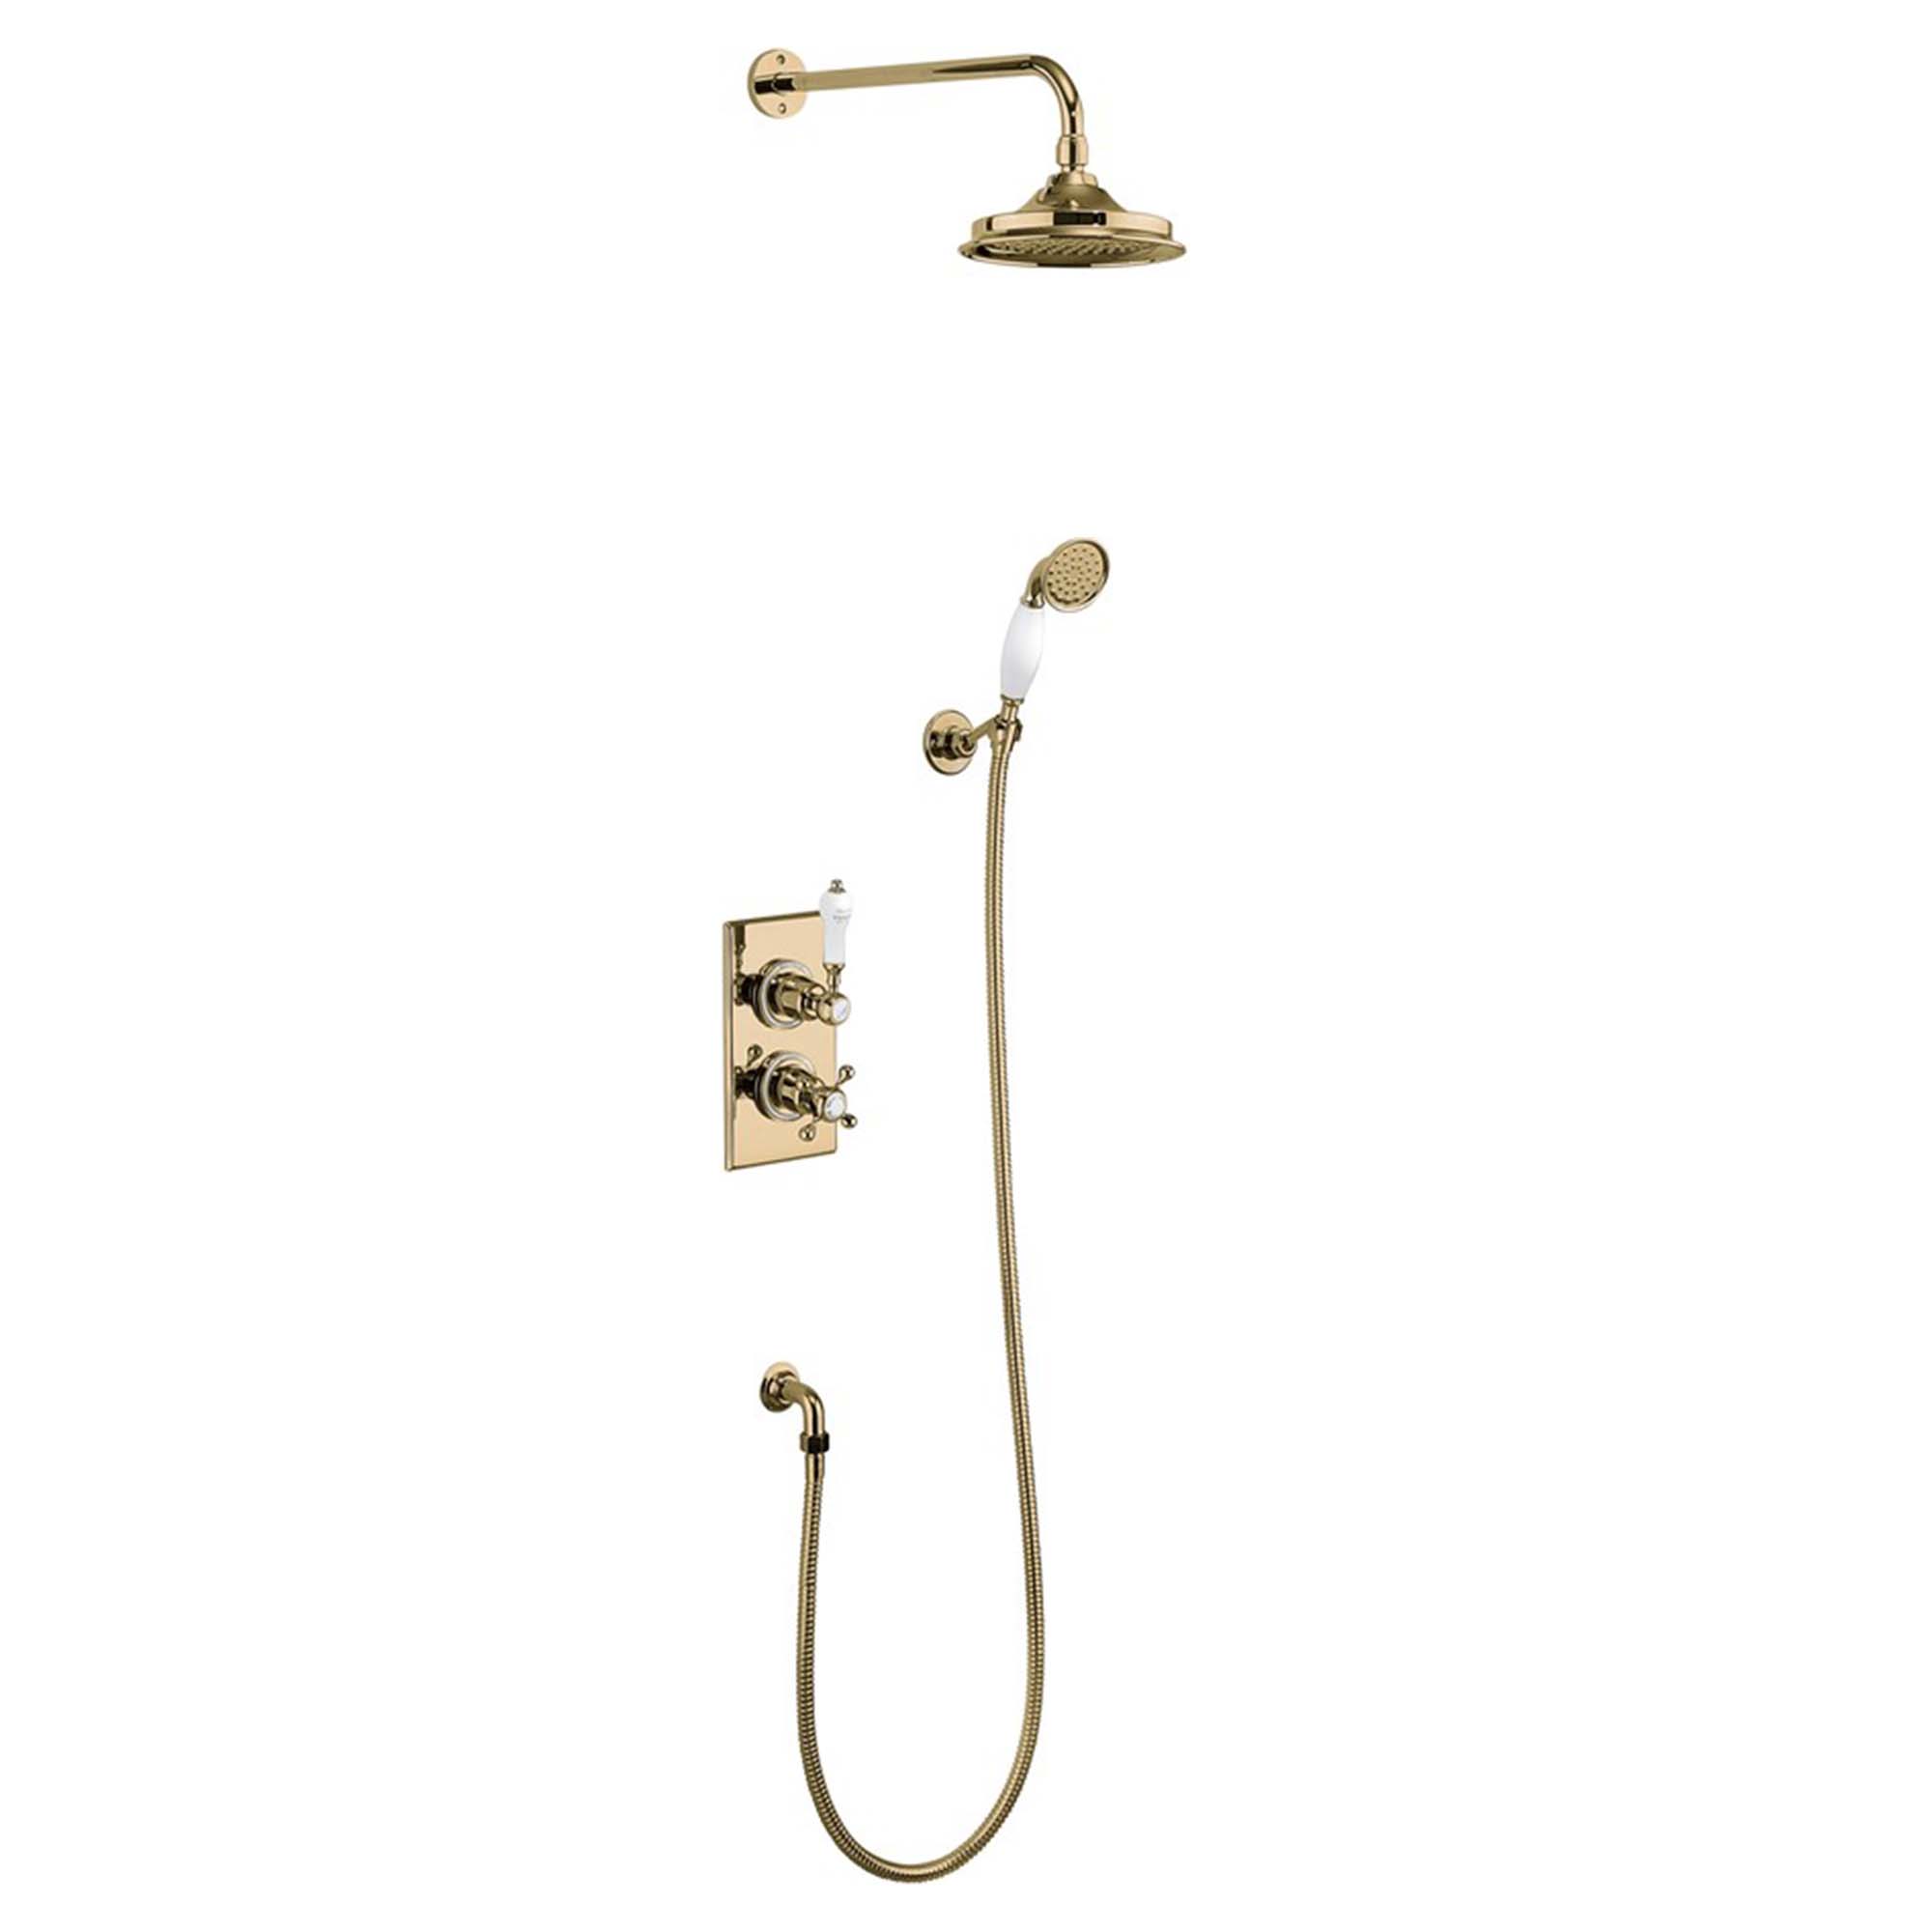 burlington trent dual outlet shower valve with shower handset and overhead gold